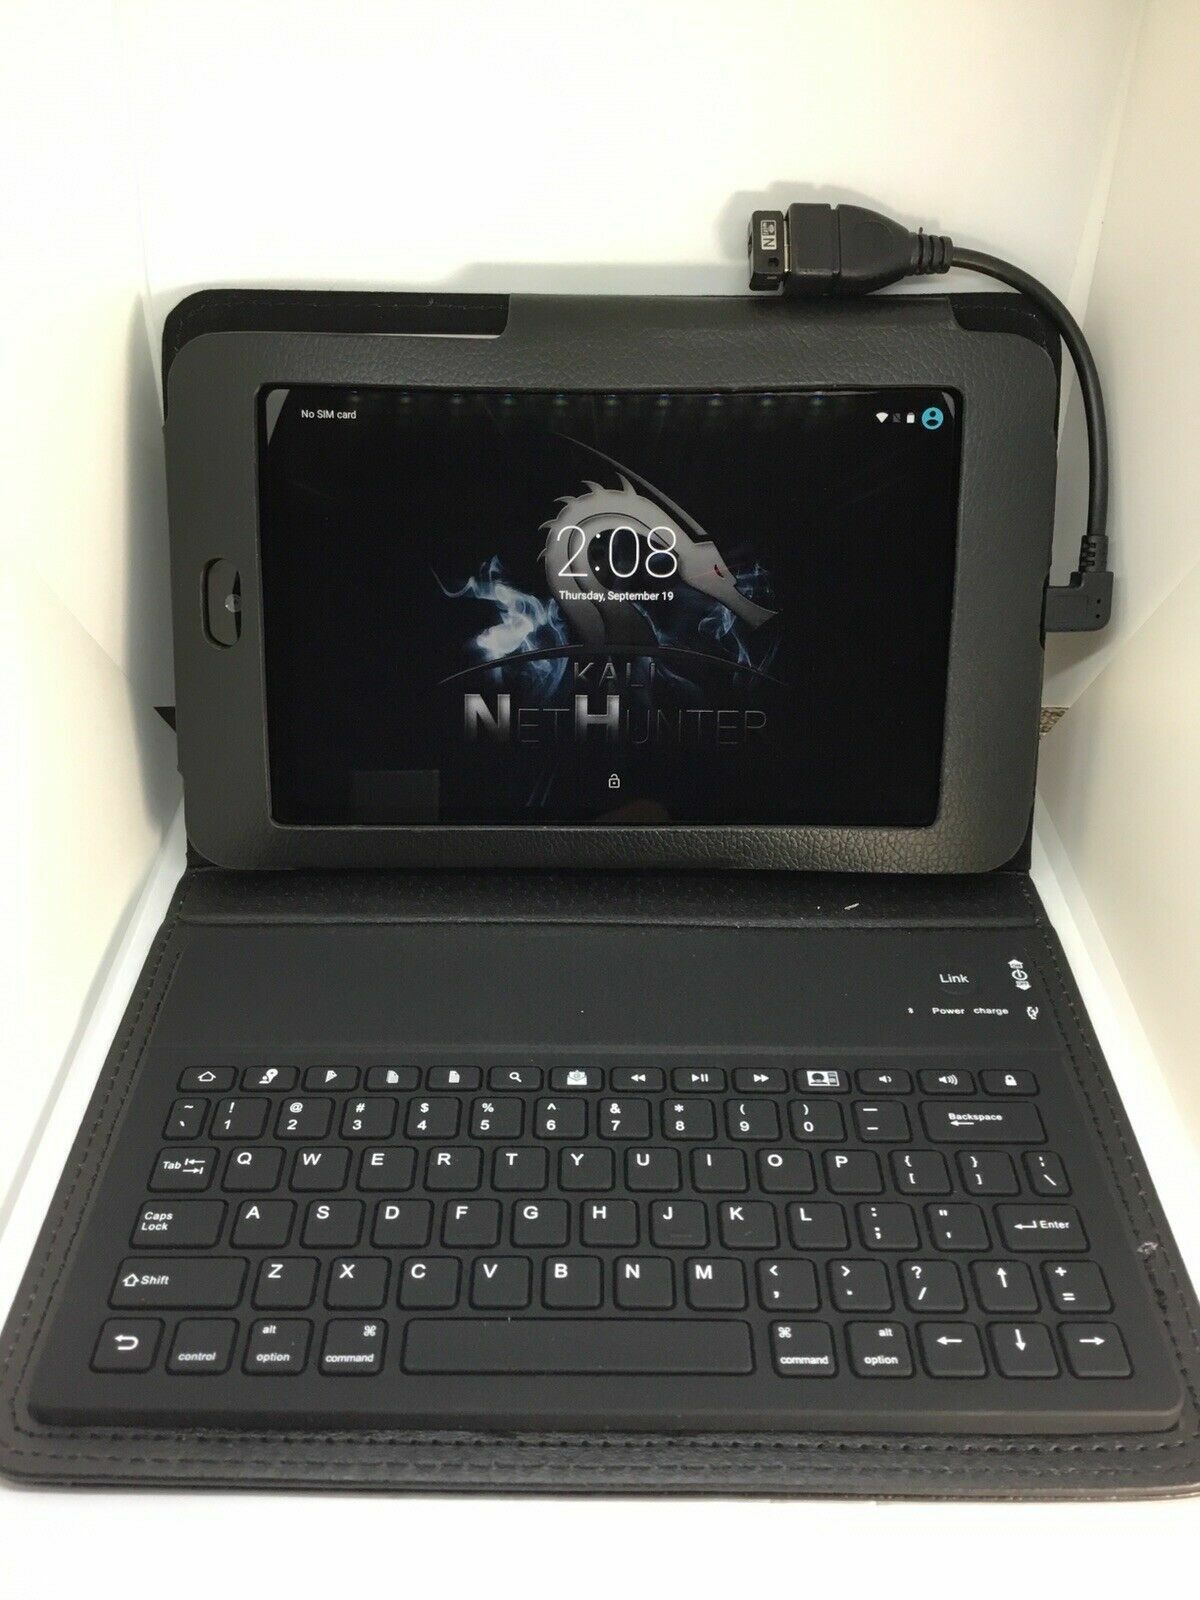 Nexus 7 Mr Robot Kali Linux Nethunter WiFi Security Pentesting Tablet Kit